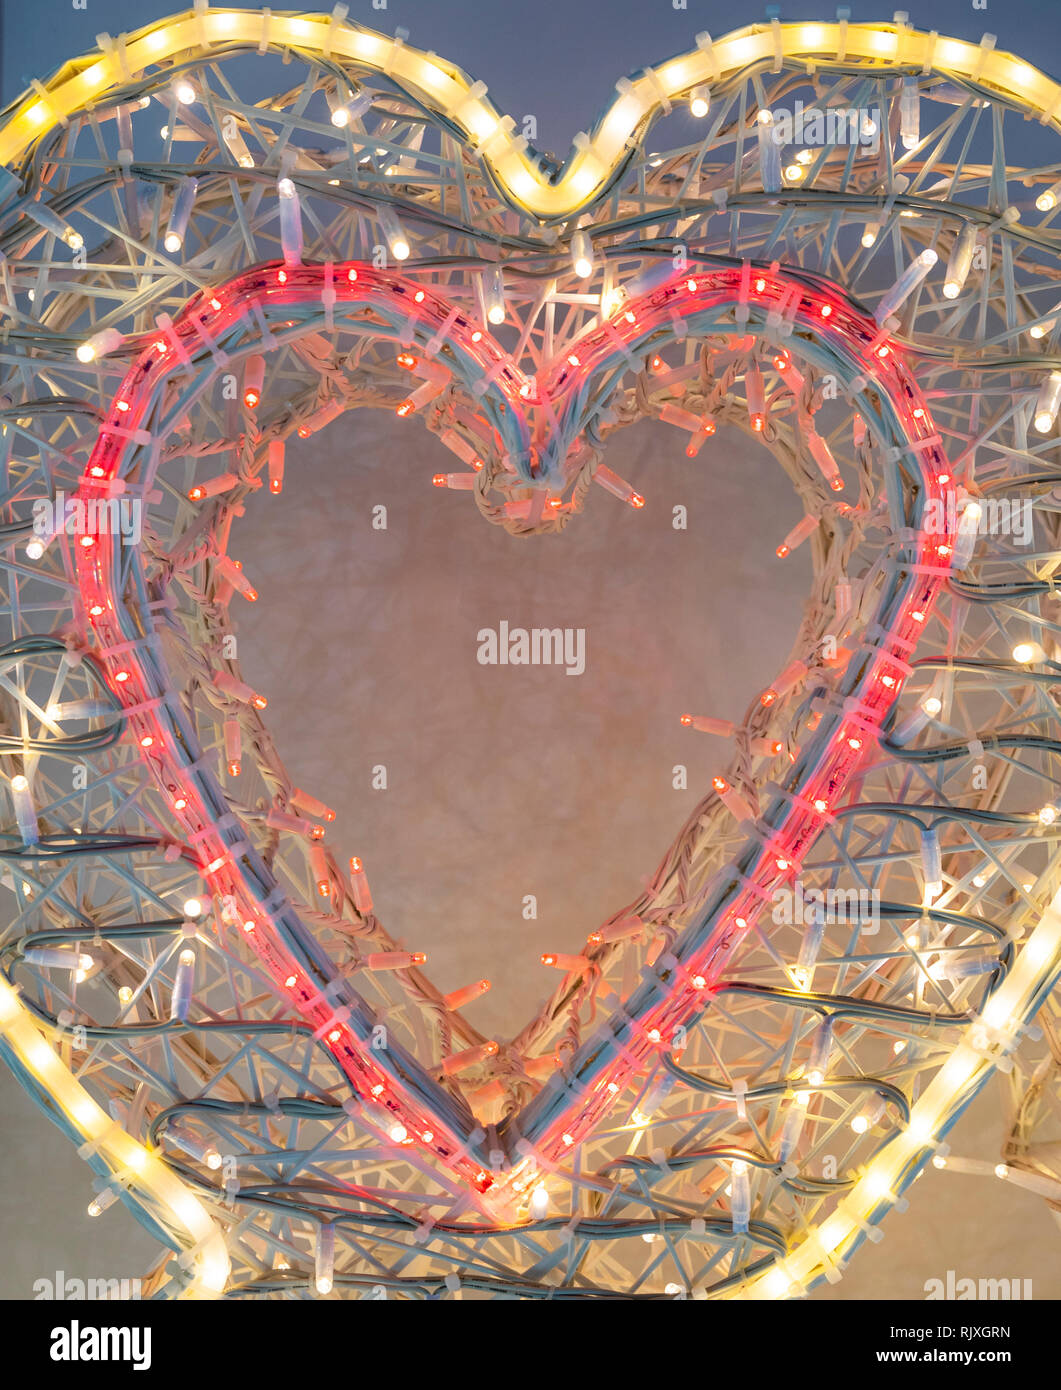 Illuminated heart shape made of electric lamps Stock Photo